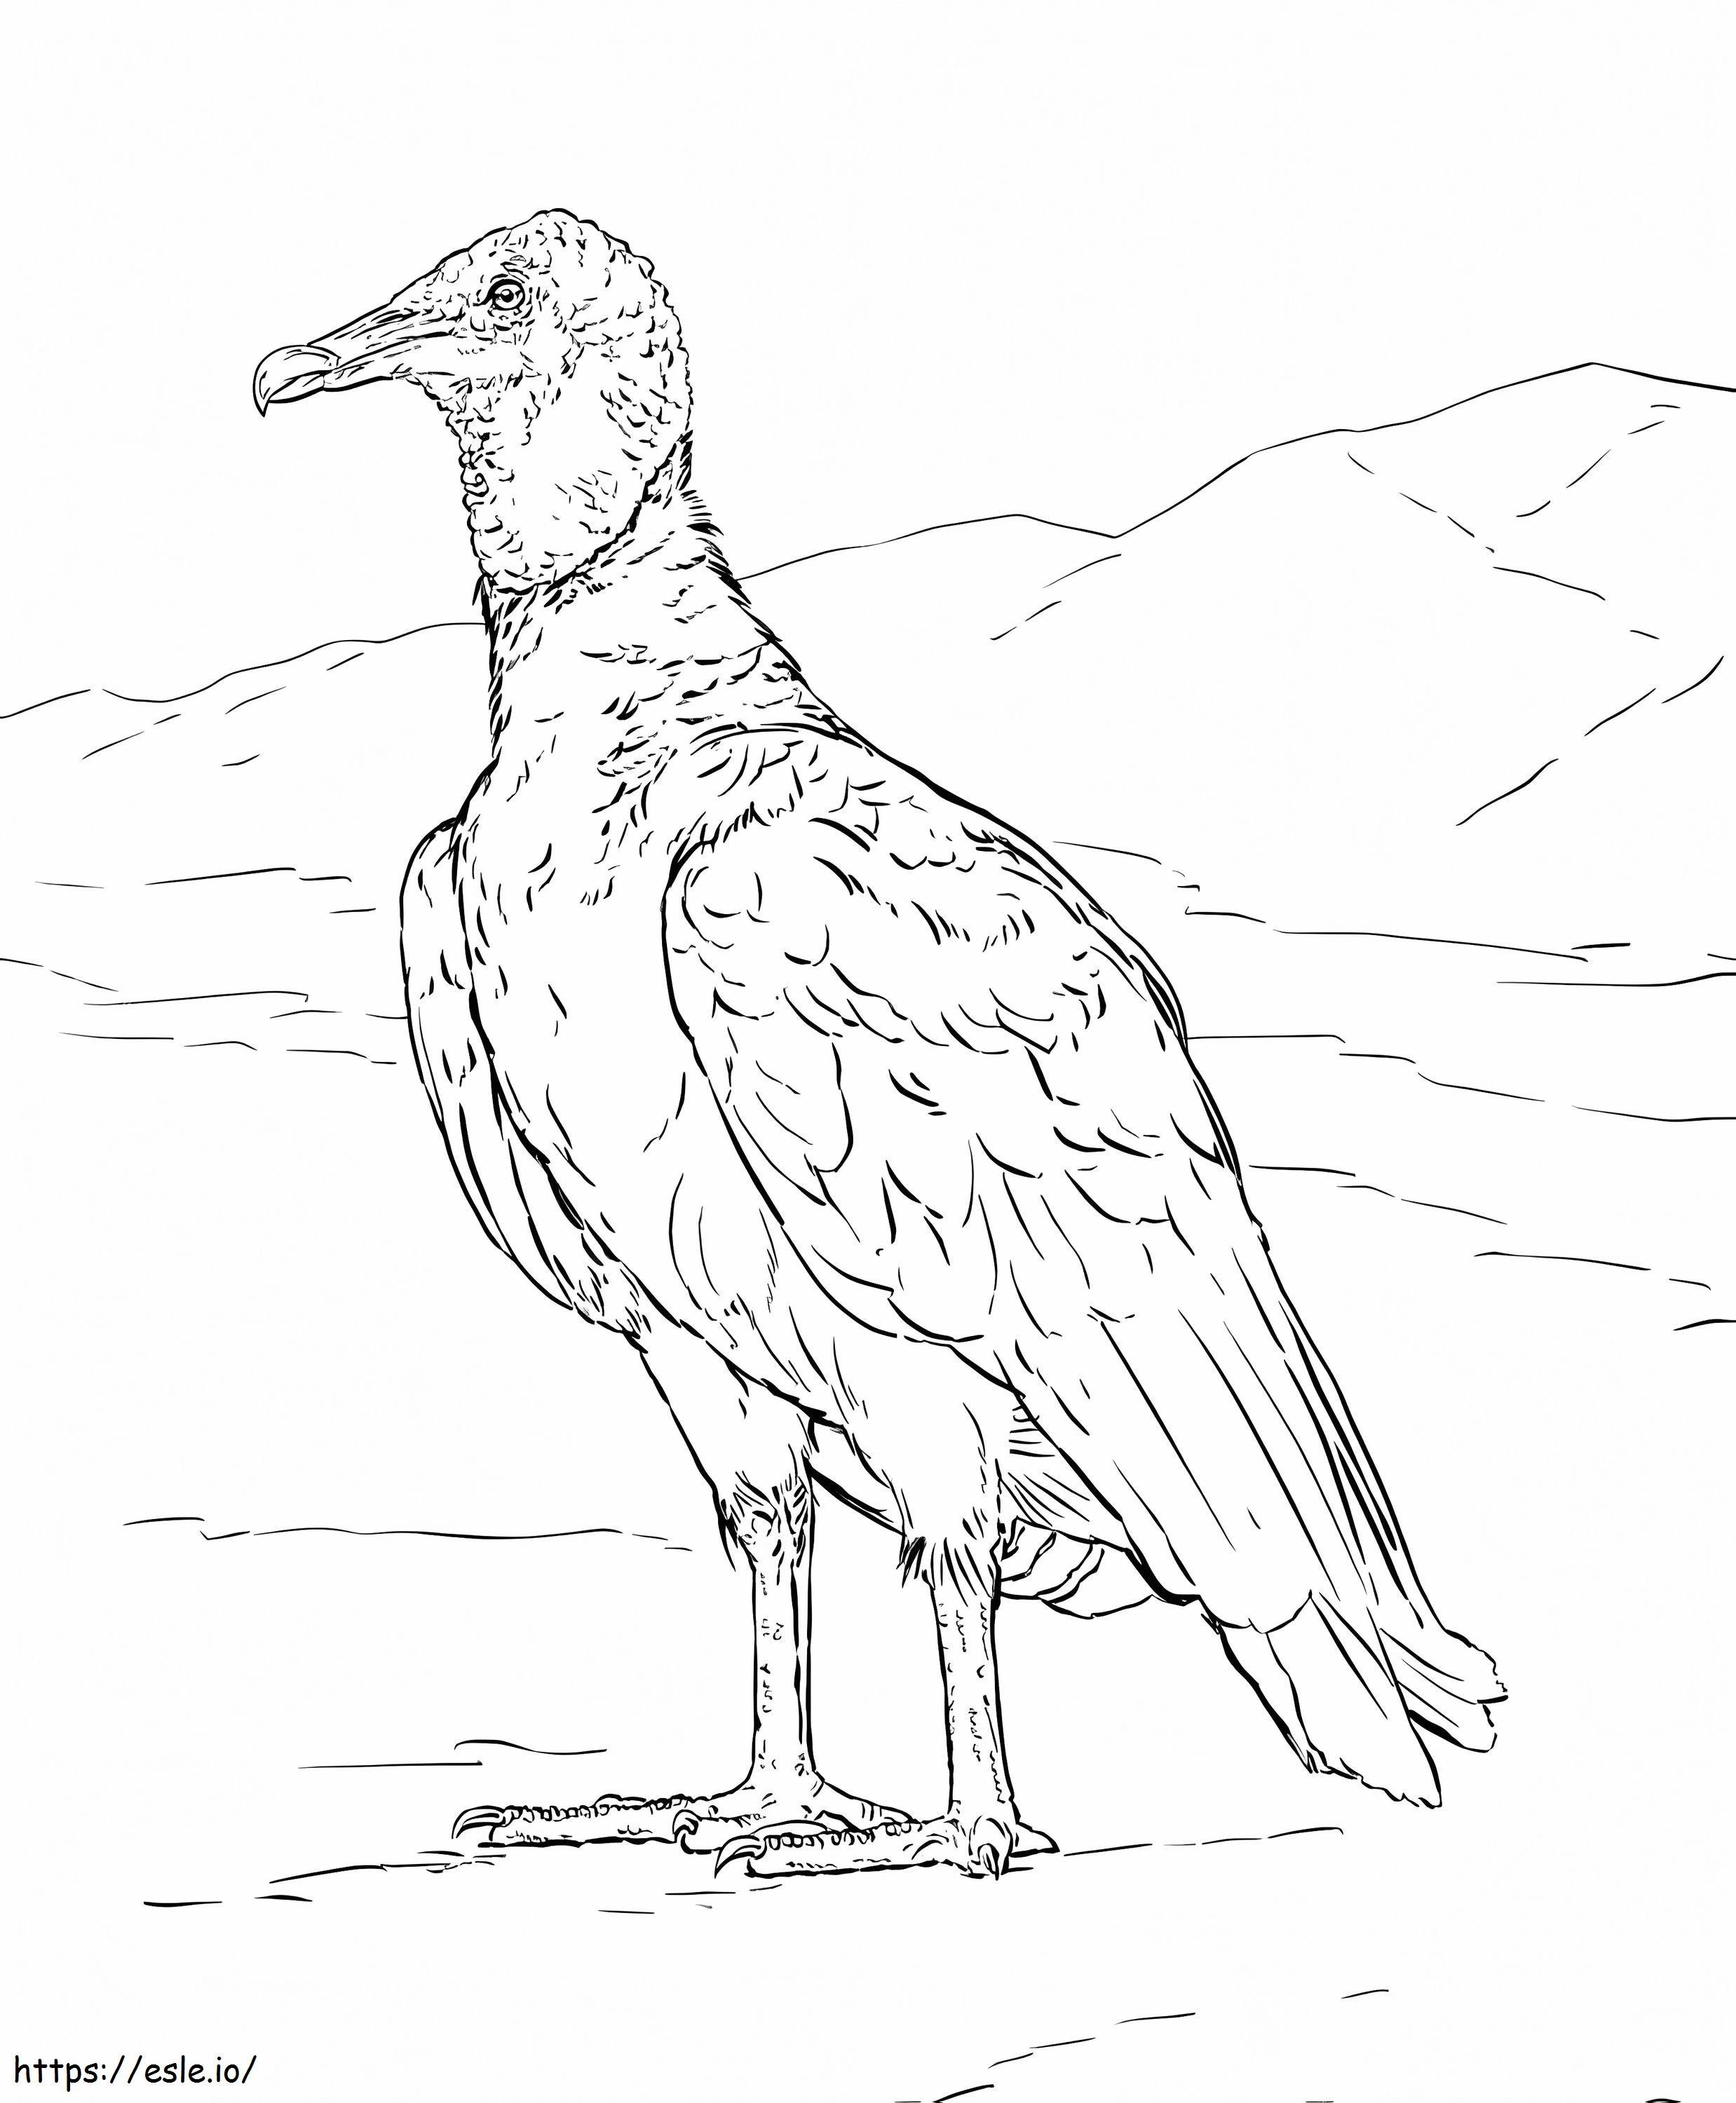 Black Vulture coloring page